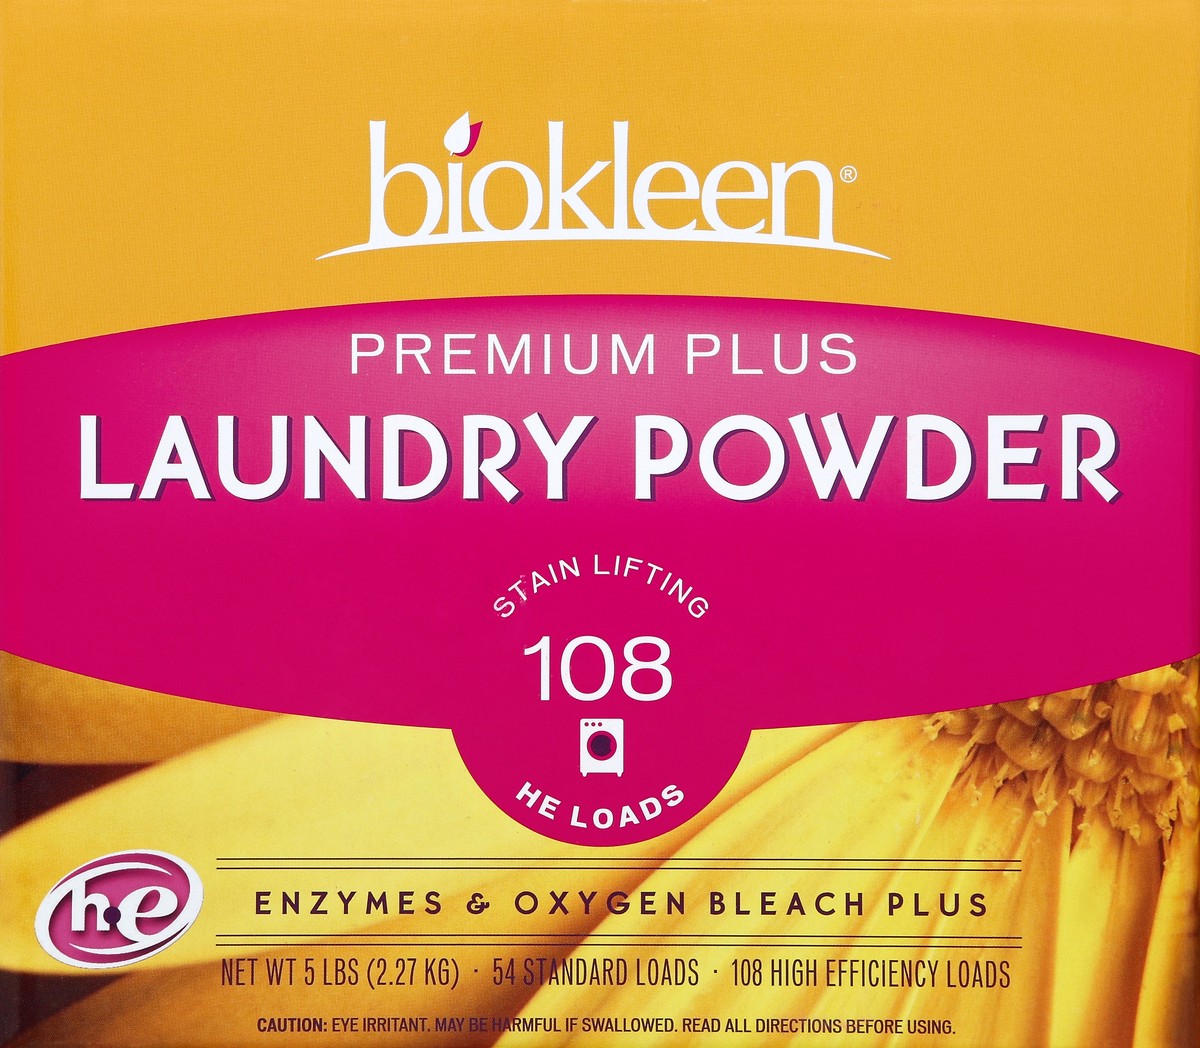 slide 4 of 4, Biokleen Laundry Powder Premium Plus Stain Lifting Enzyme Formula, 5 lb